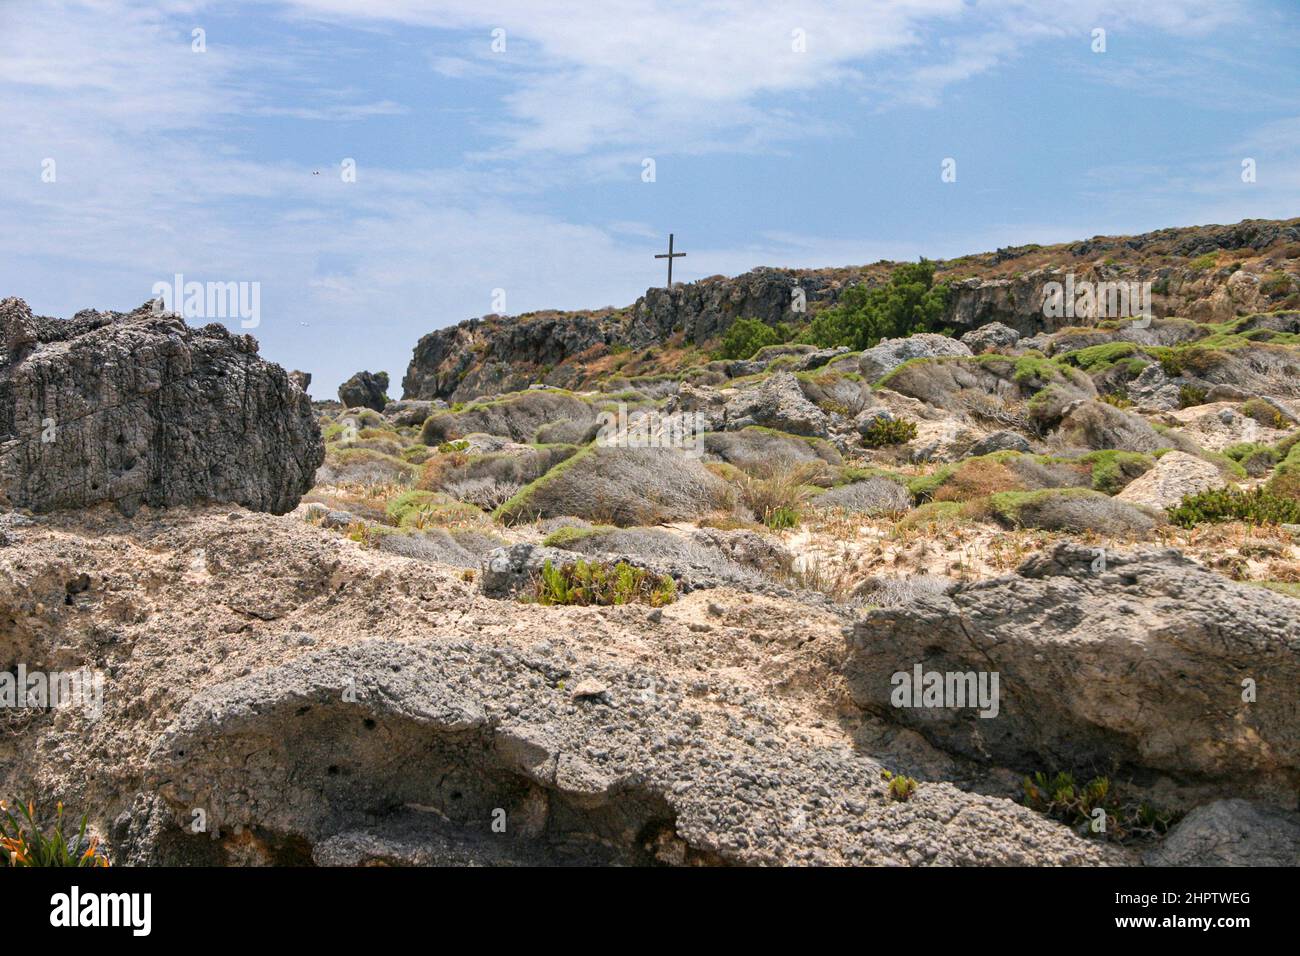 Ruta áspera a la capilla de Agia Irini: Una ruta rocosa de la playa en Elafonisi en el extremo sudeste de Creta es una diminuta capilla / monumento conmemorativo. Foto de stock